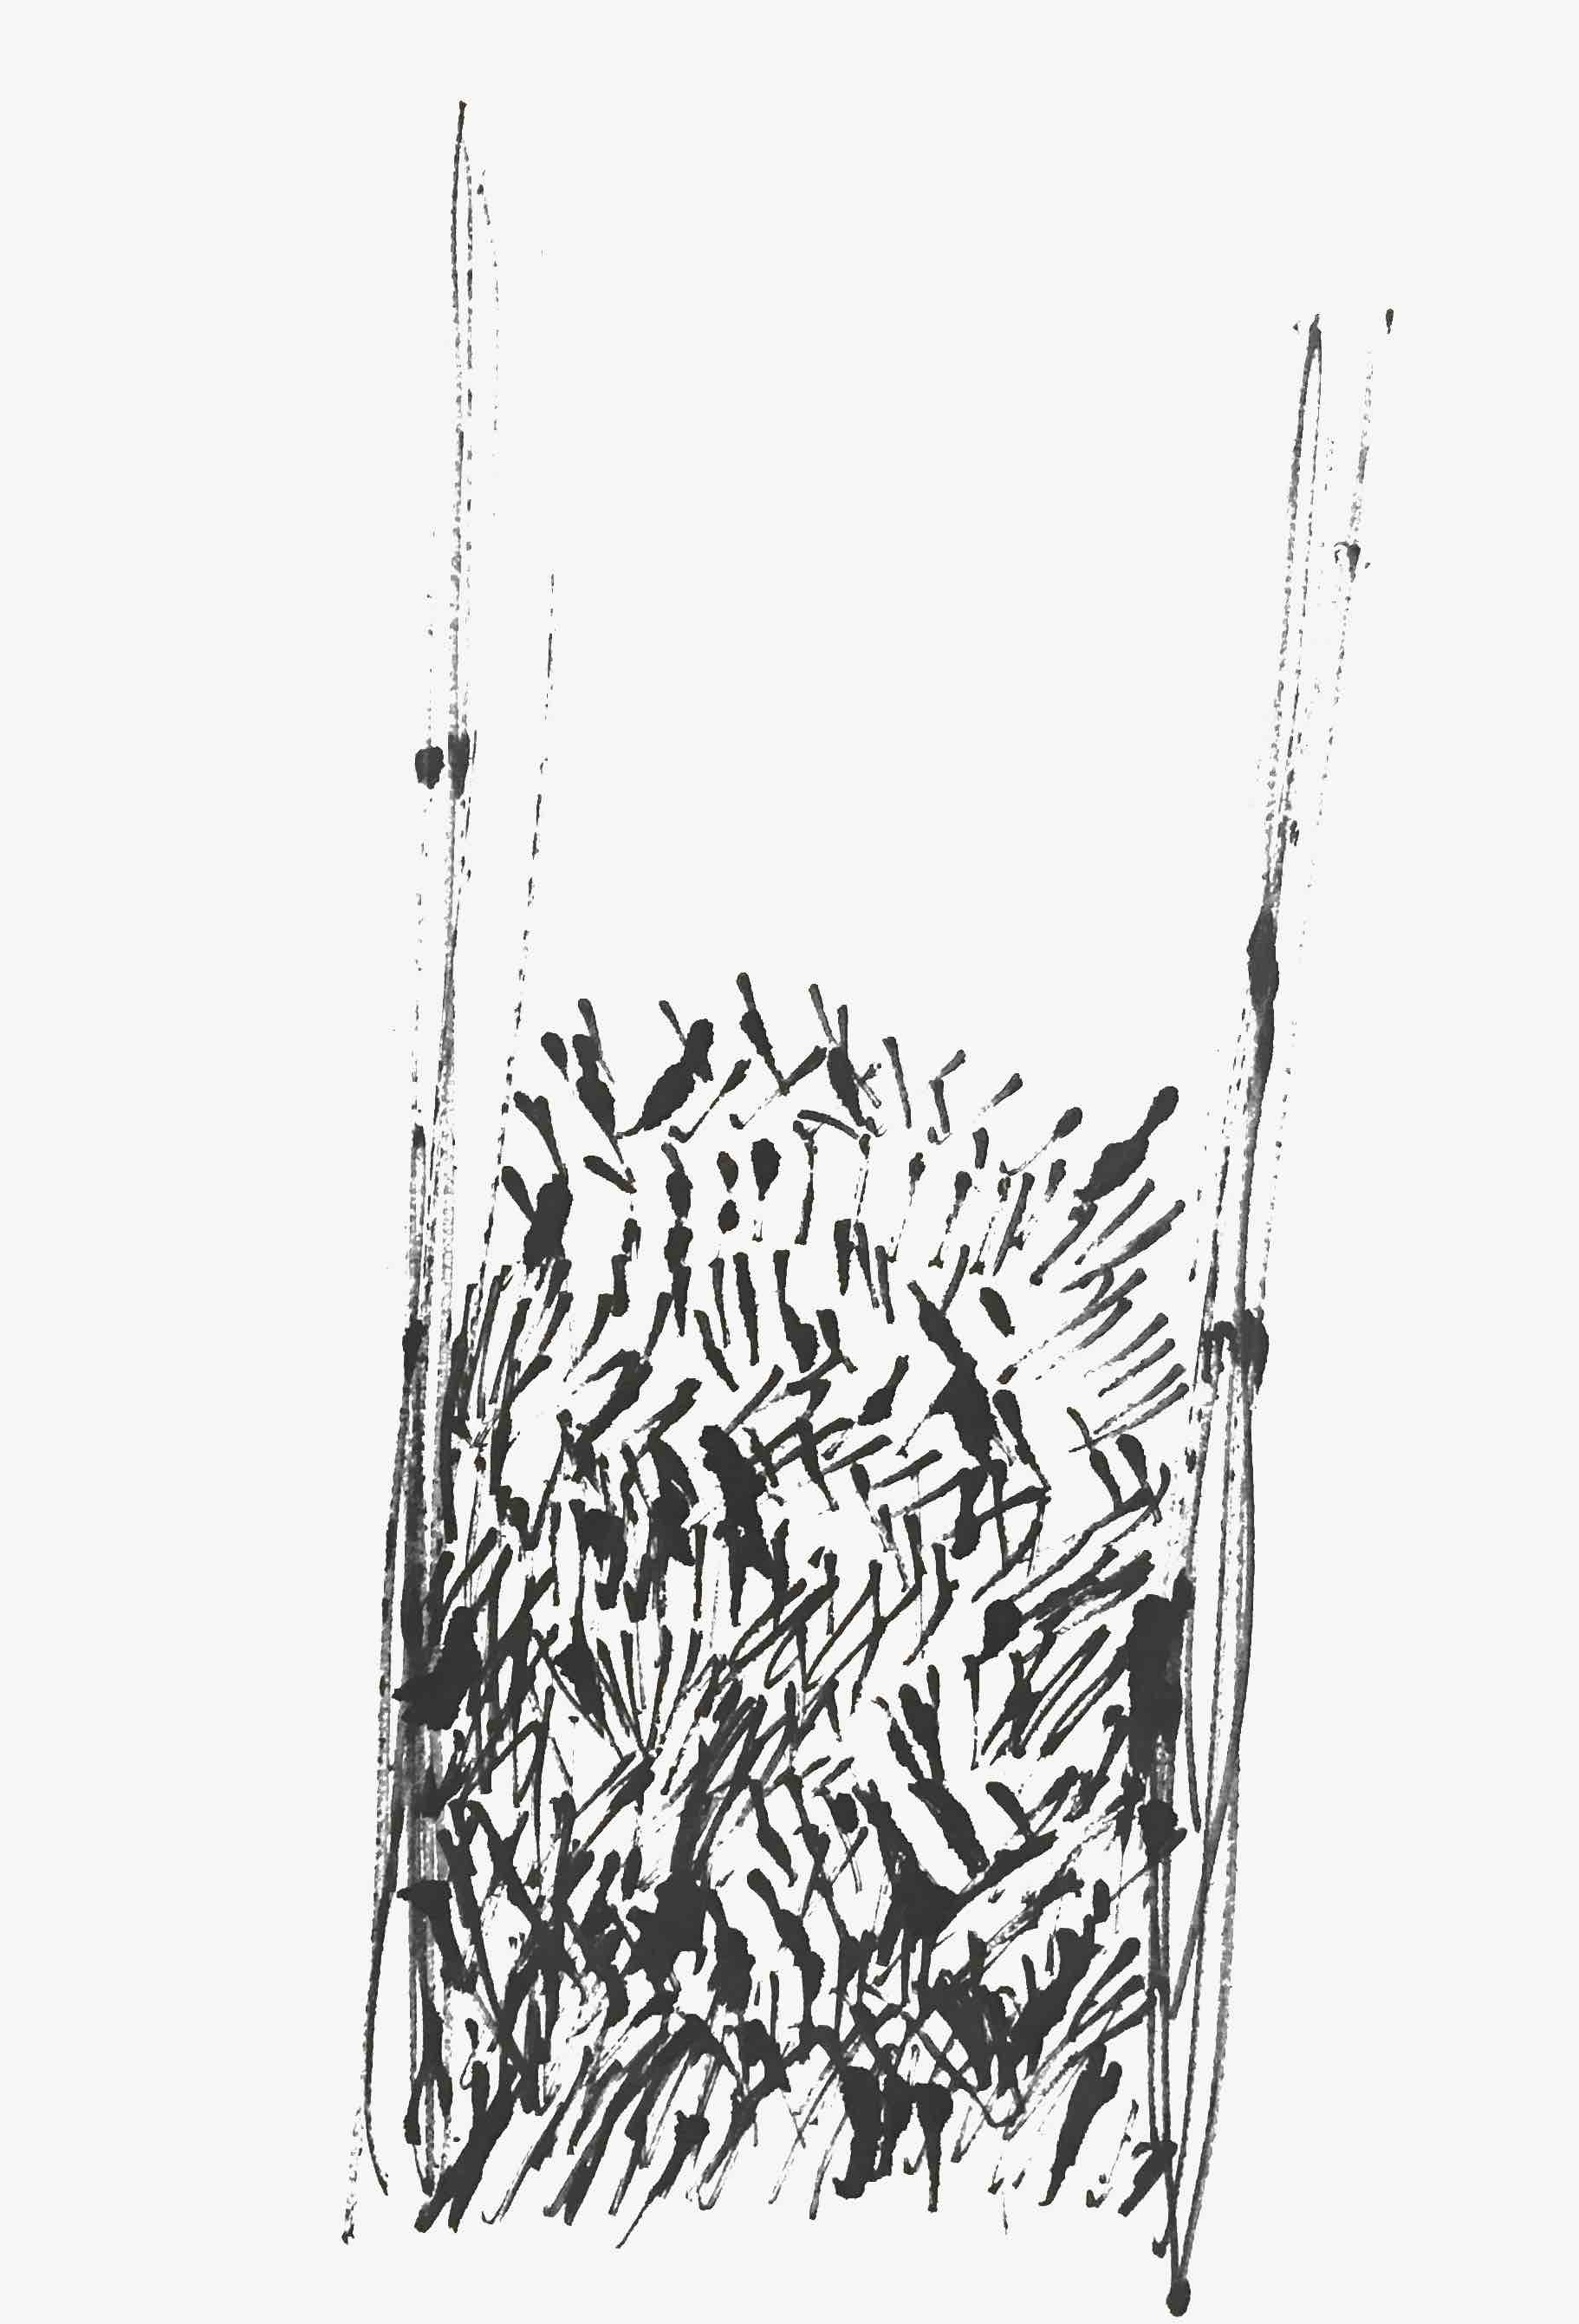 sentence fragments, ink on paper, 40 cm x 50 cm, 1985